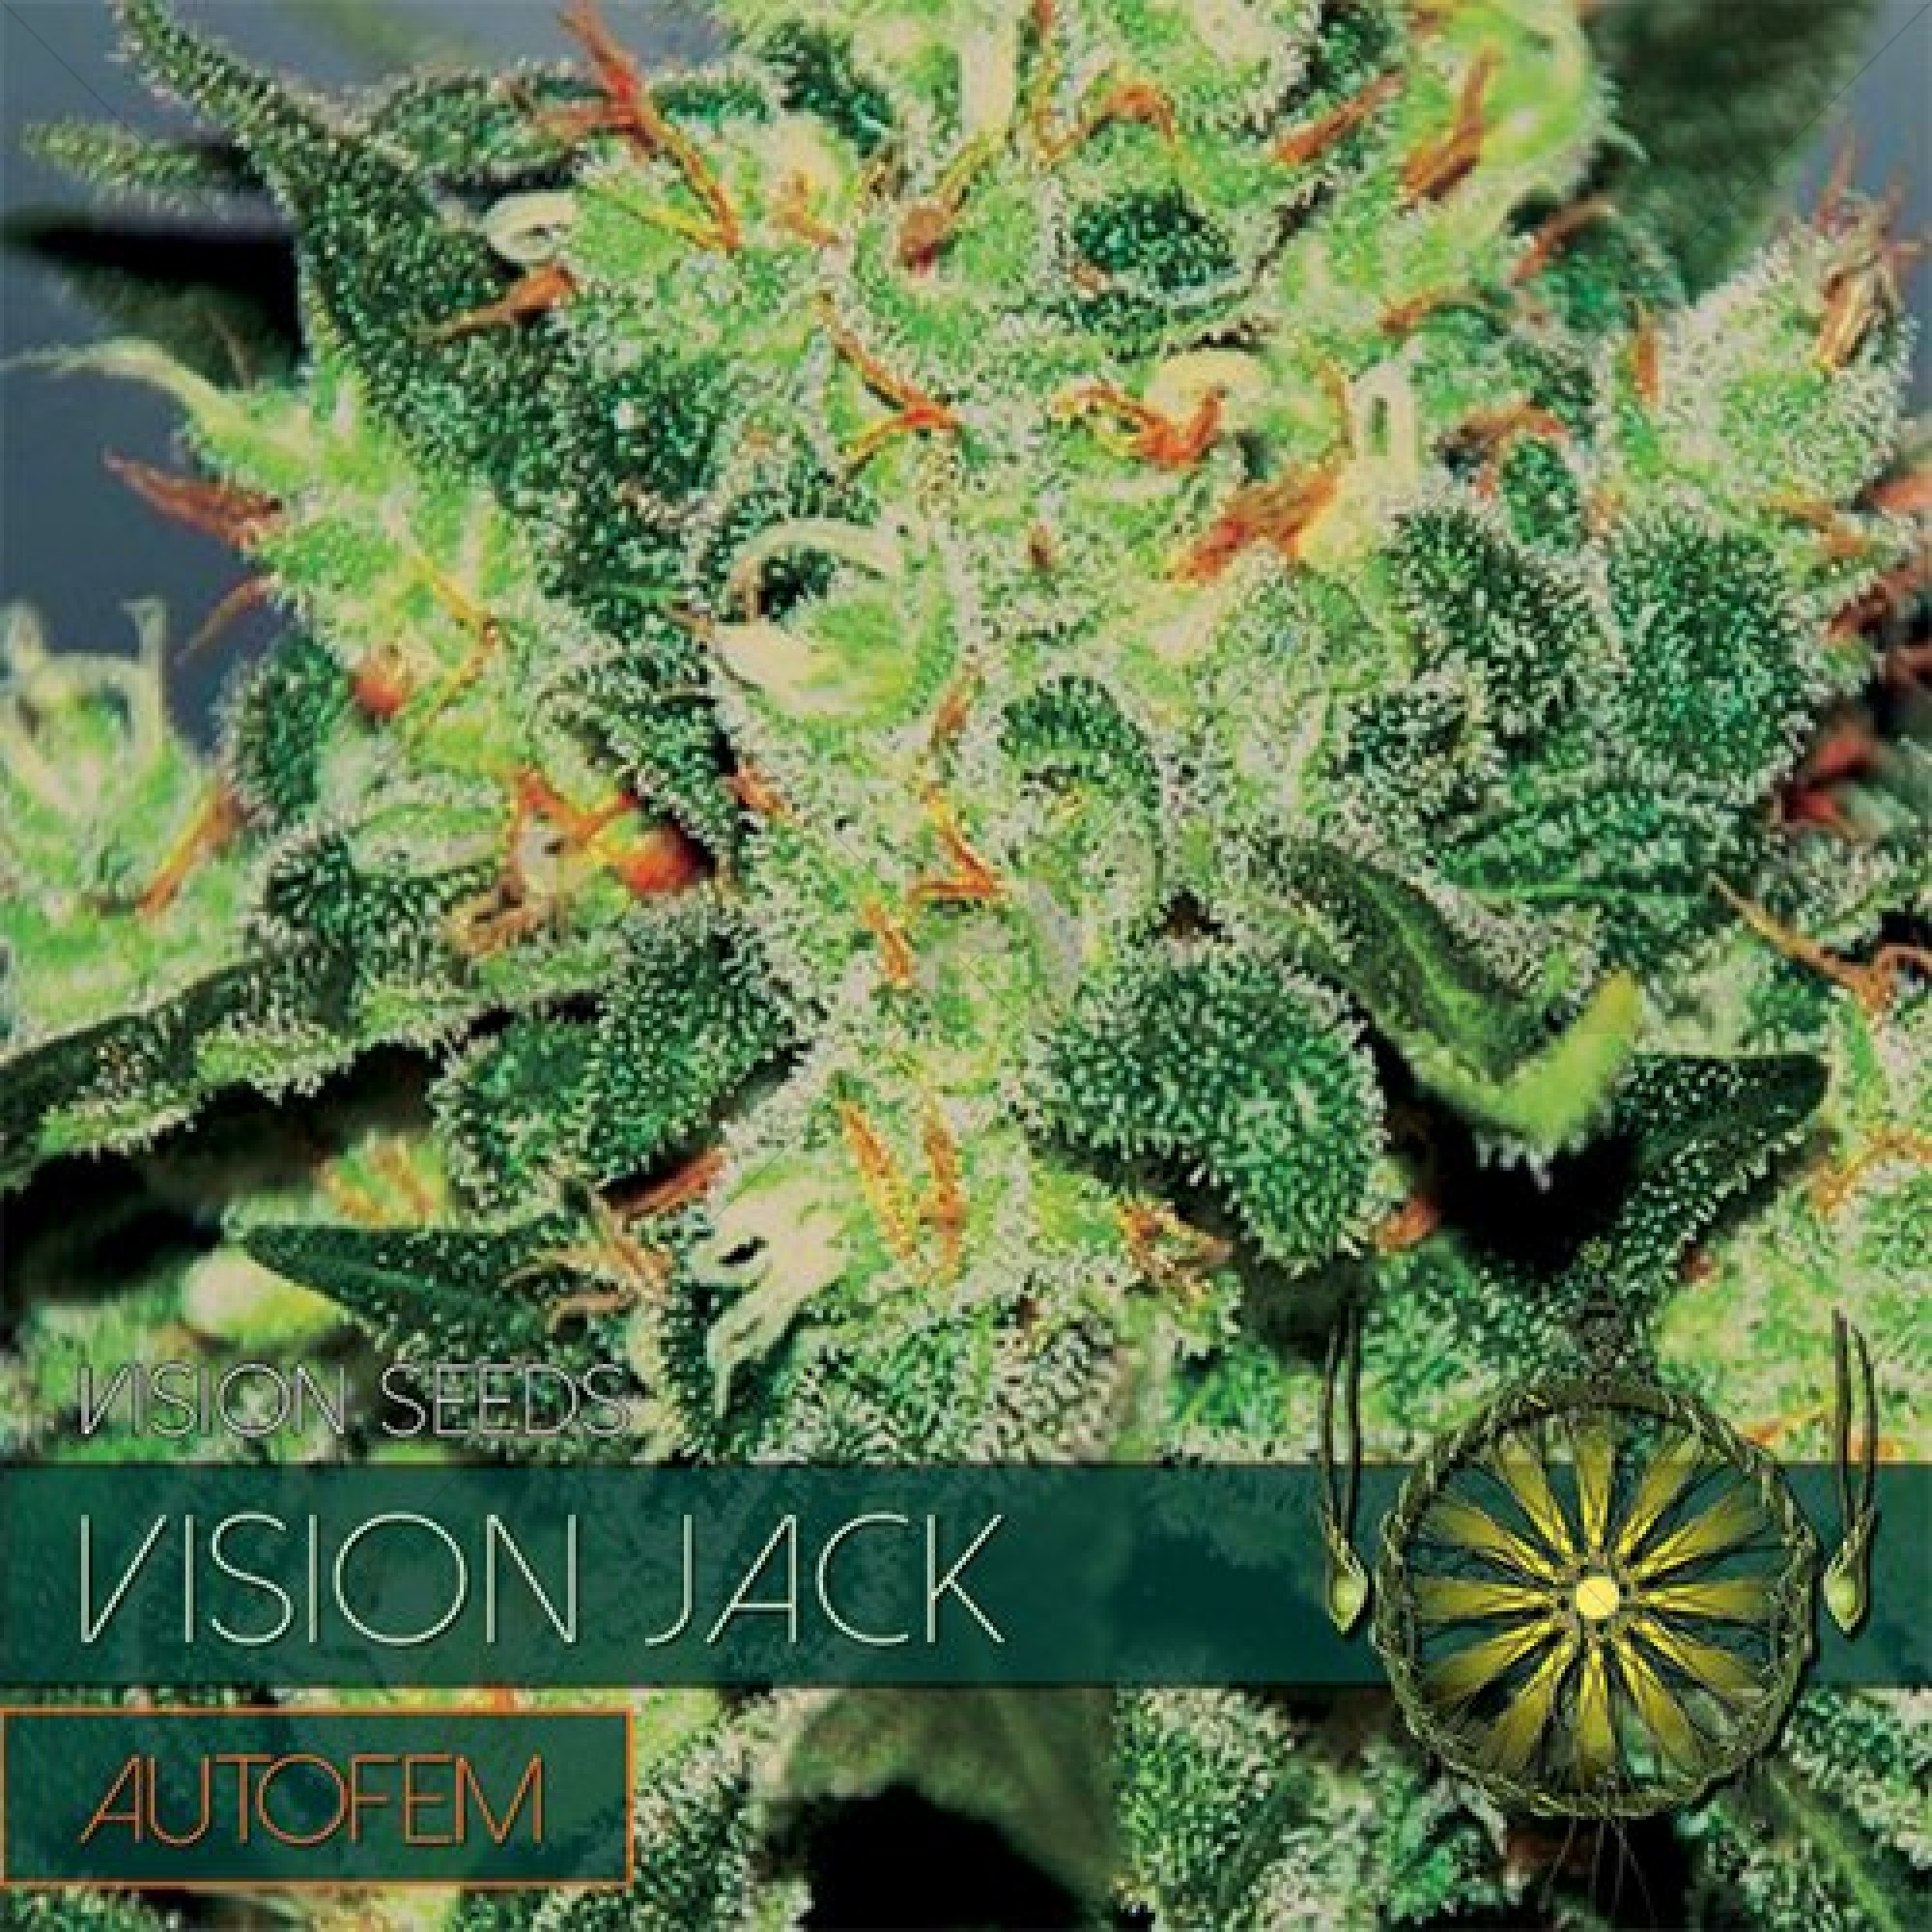 Vision Jack Auto (Vision Seeds)  Feminized